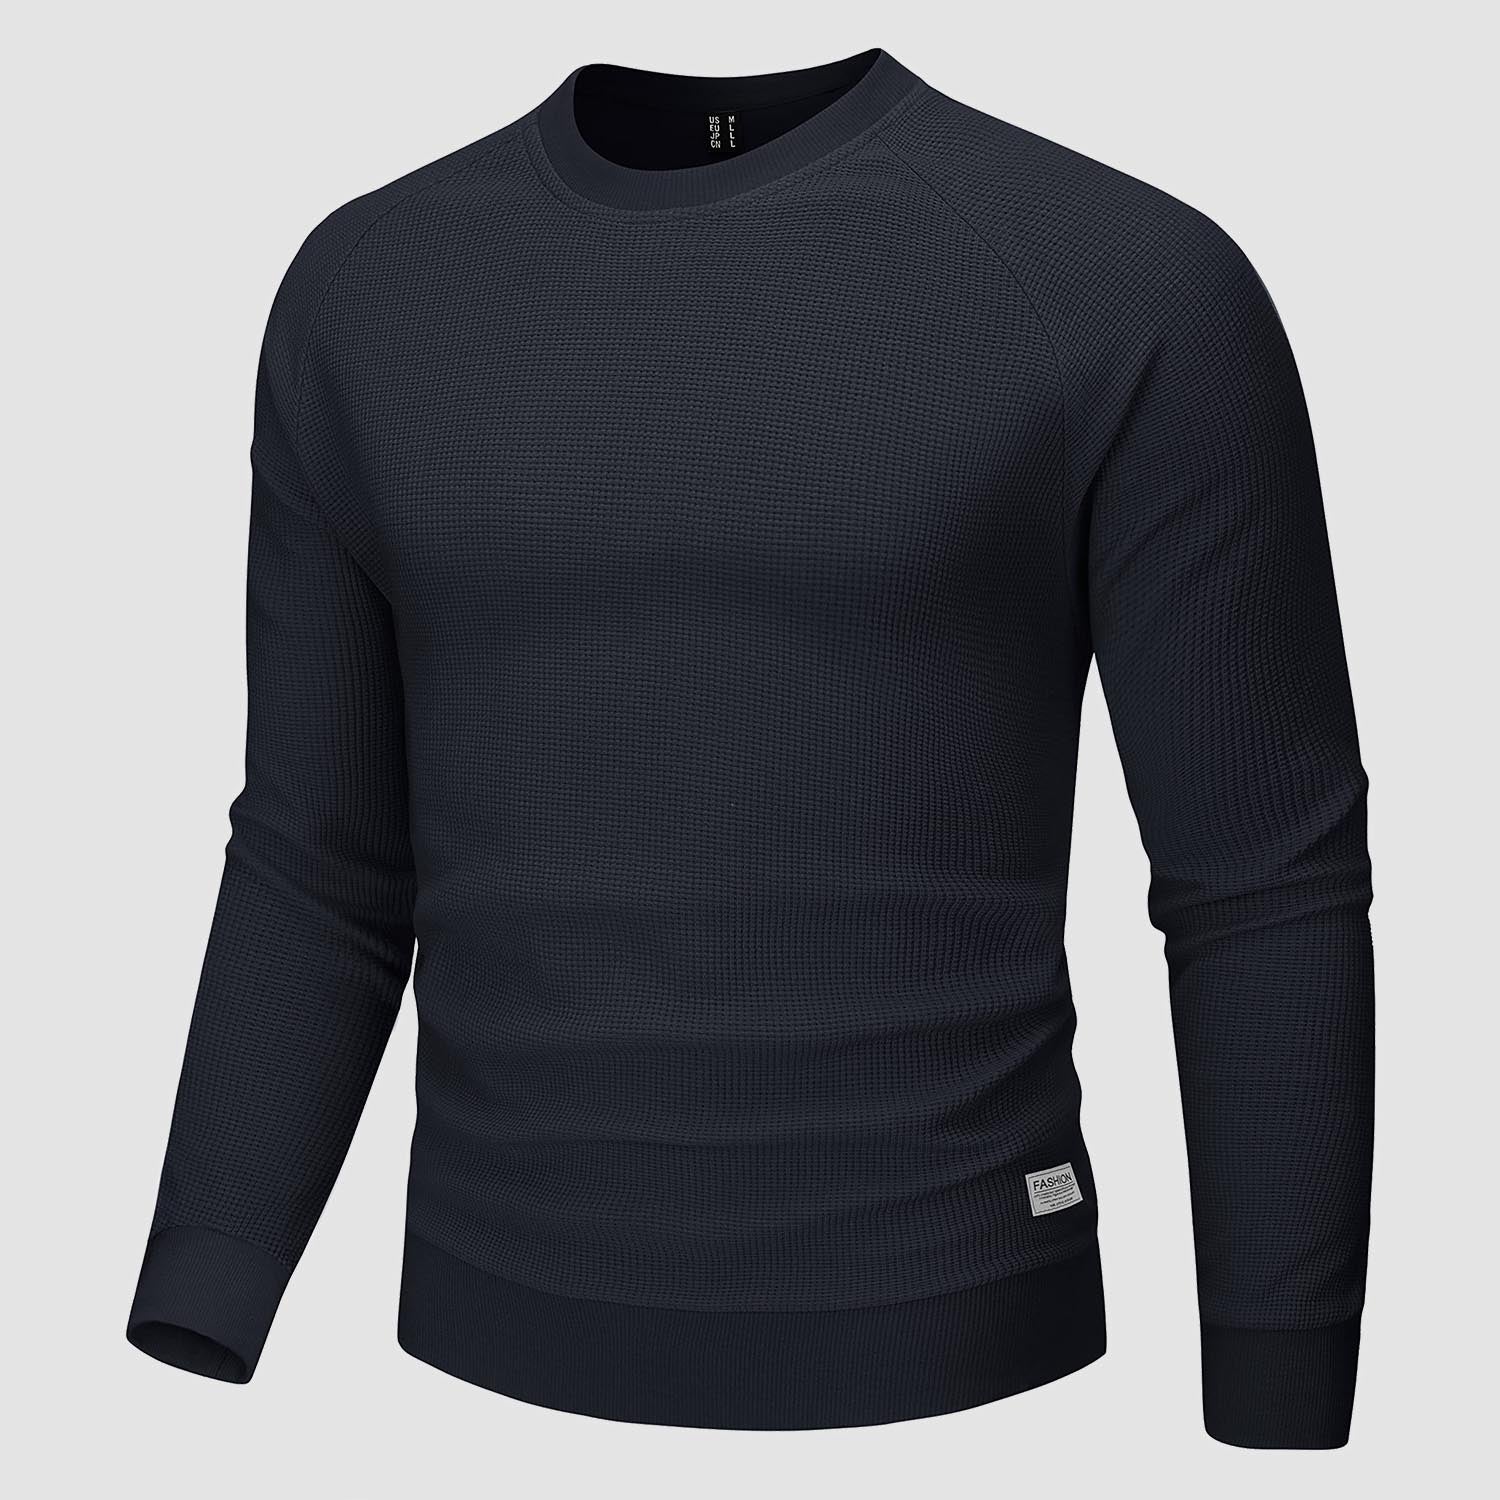 Men's Crewneck Sweatshirts Waffle Knit Pullover Sweater Casual Shirt Lightweight Workout Tops